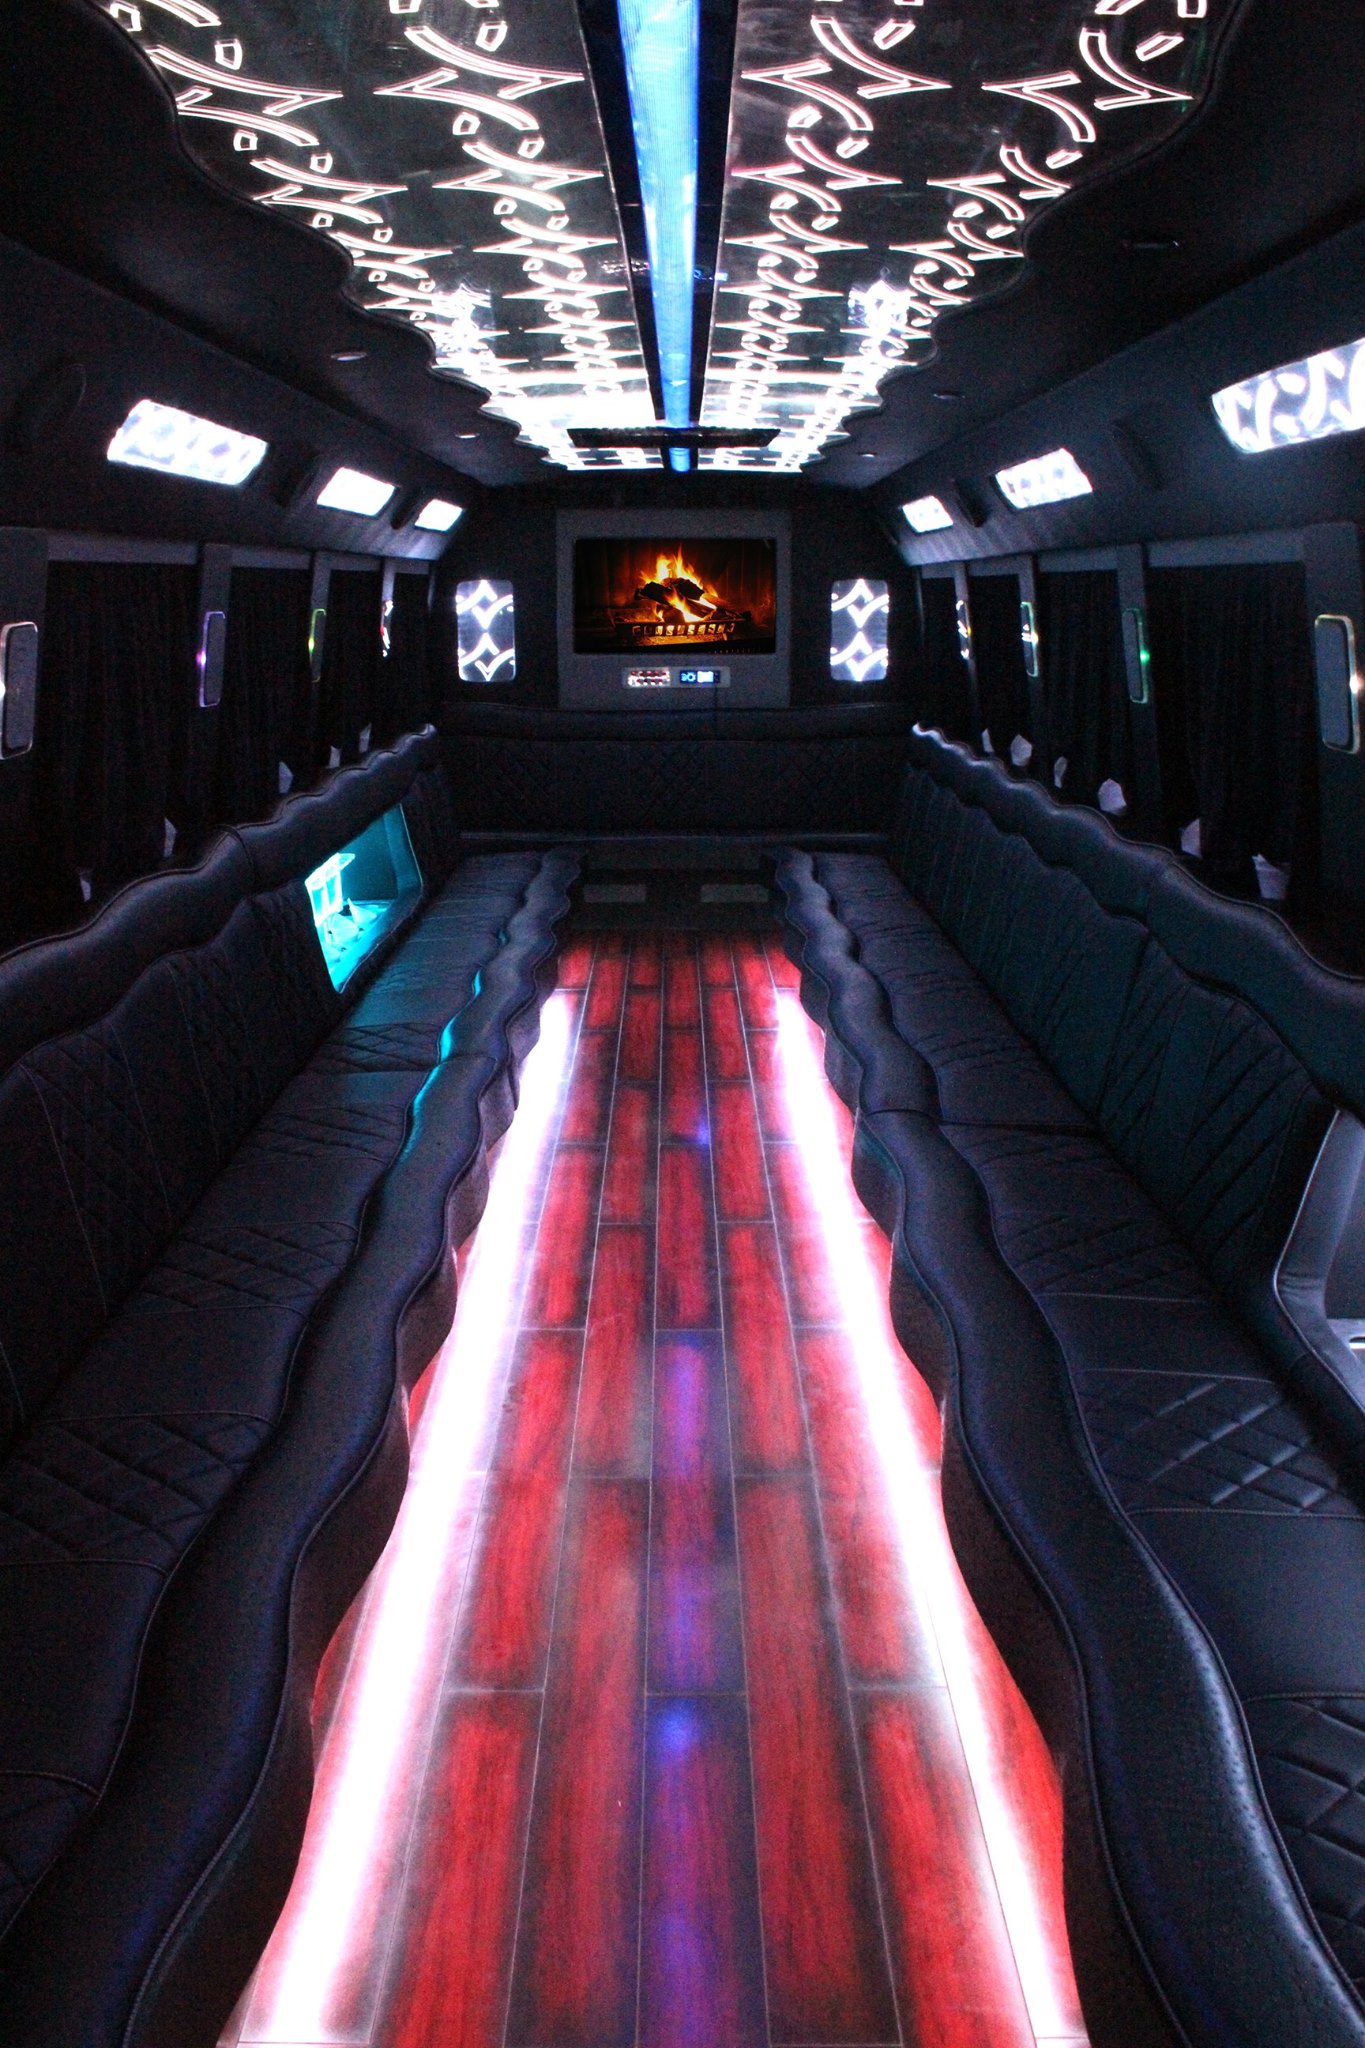 40 Passenger Luxury Limo Bus Interior 6